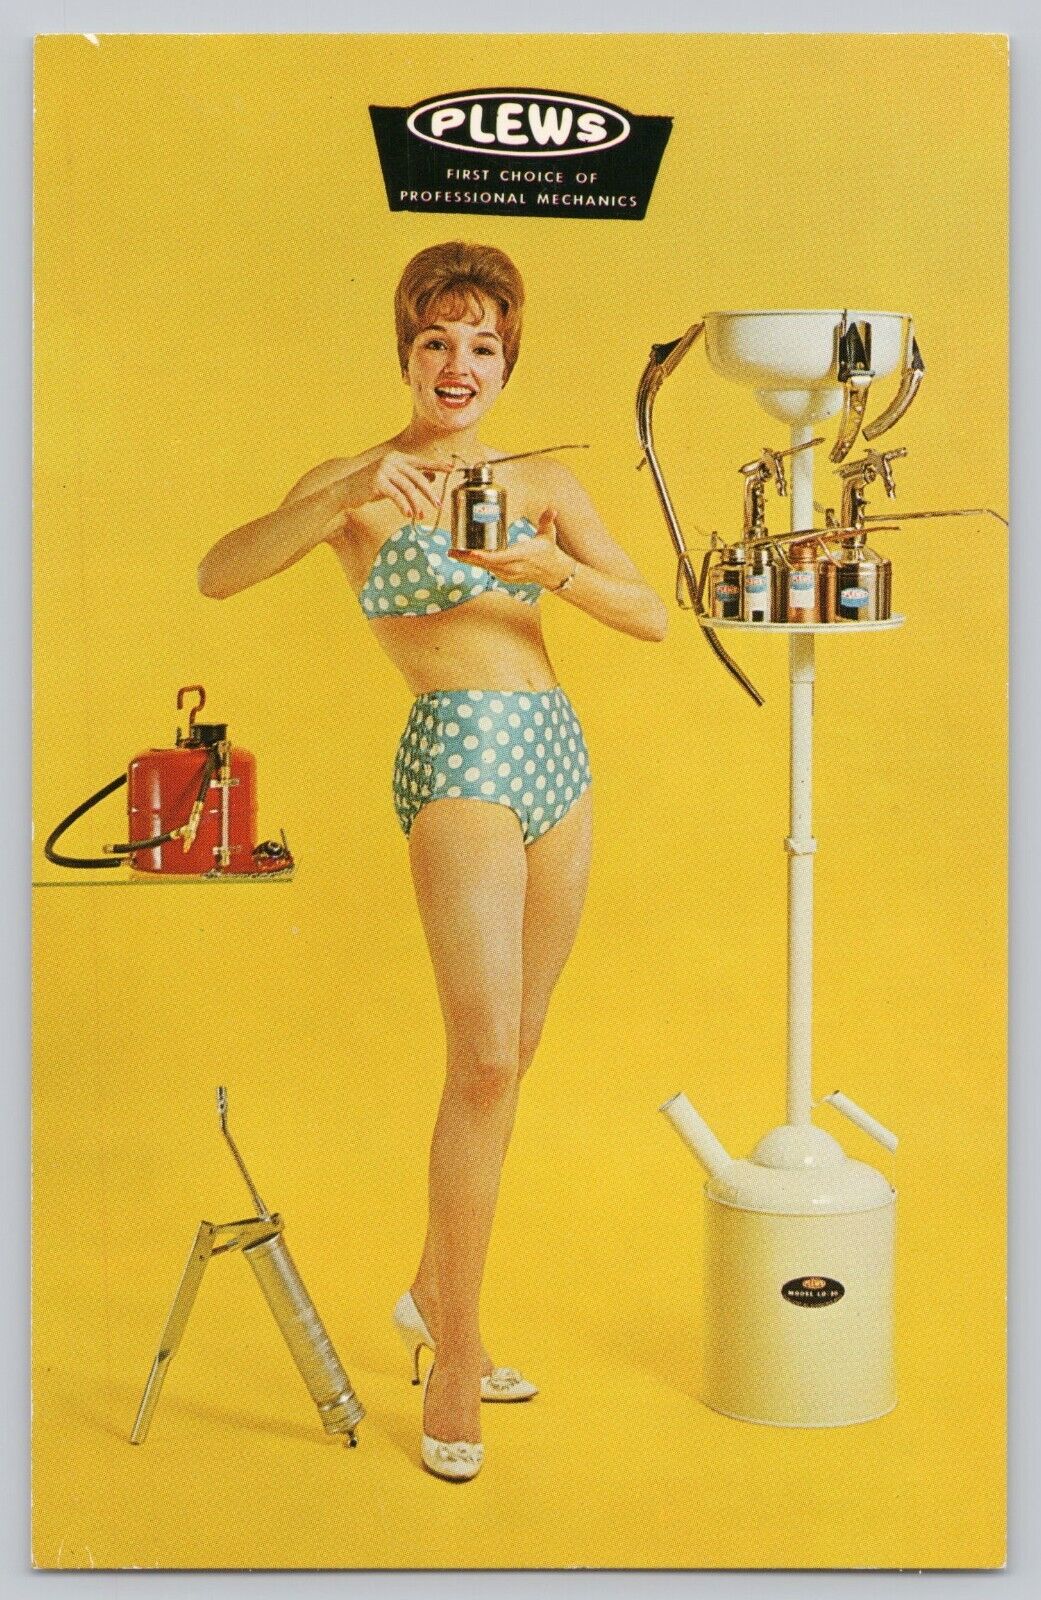 Plew Products Advertisement Postcard 1960s Bikini Model Yellow Background Tools